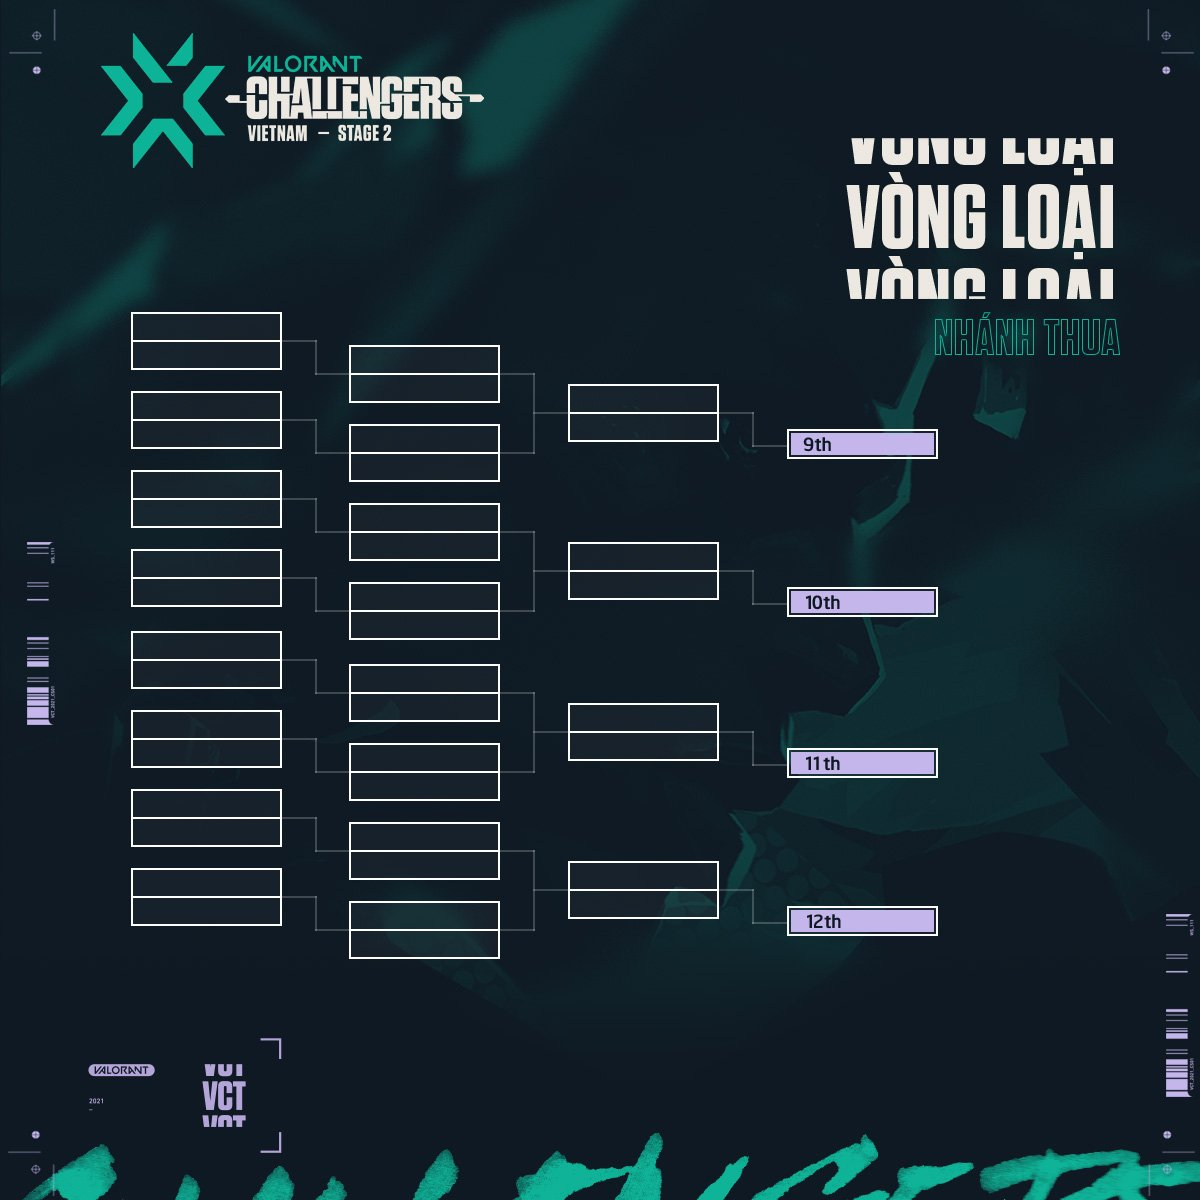 VALORANT Champions Tour 2021: Việt Nam Challengers Stage 2 chuẩn bị khởi tranh